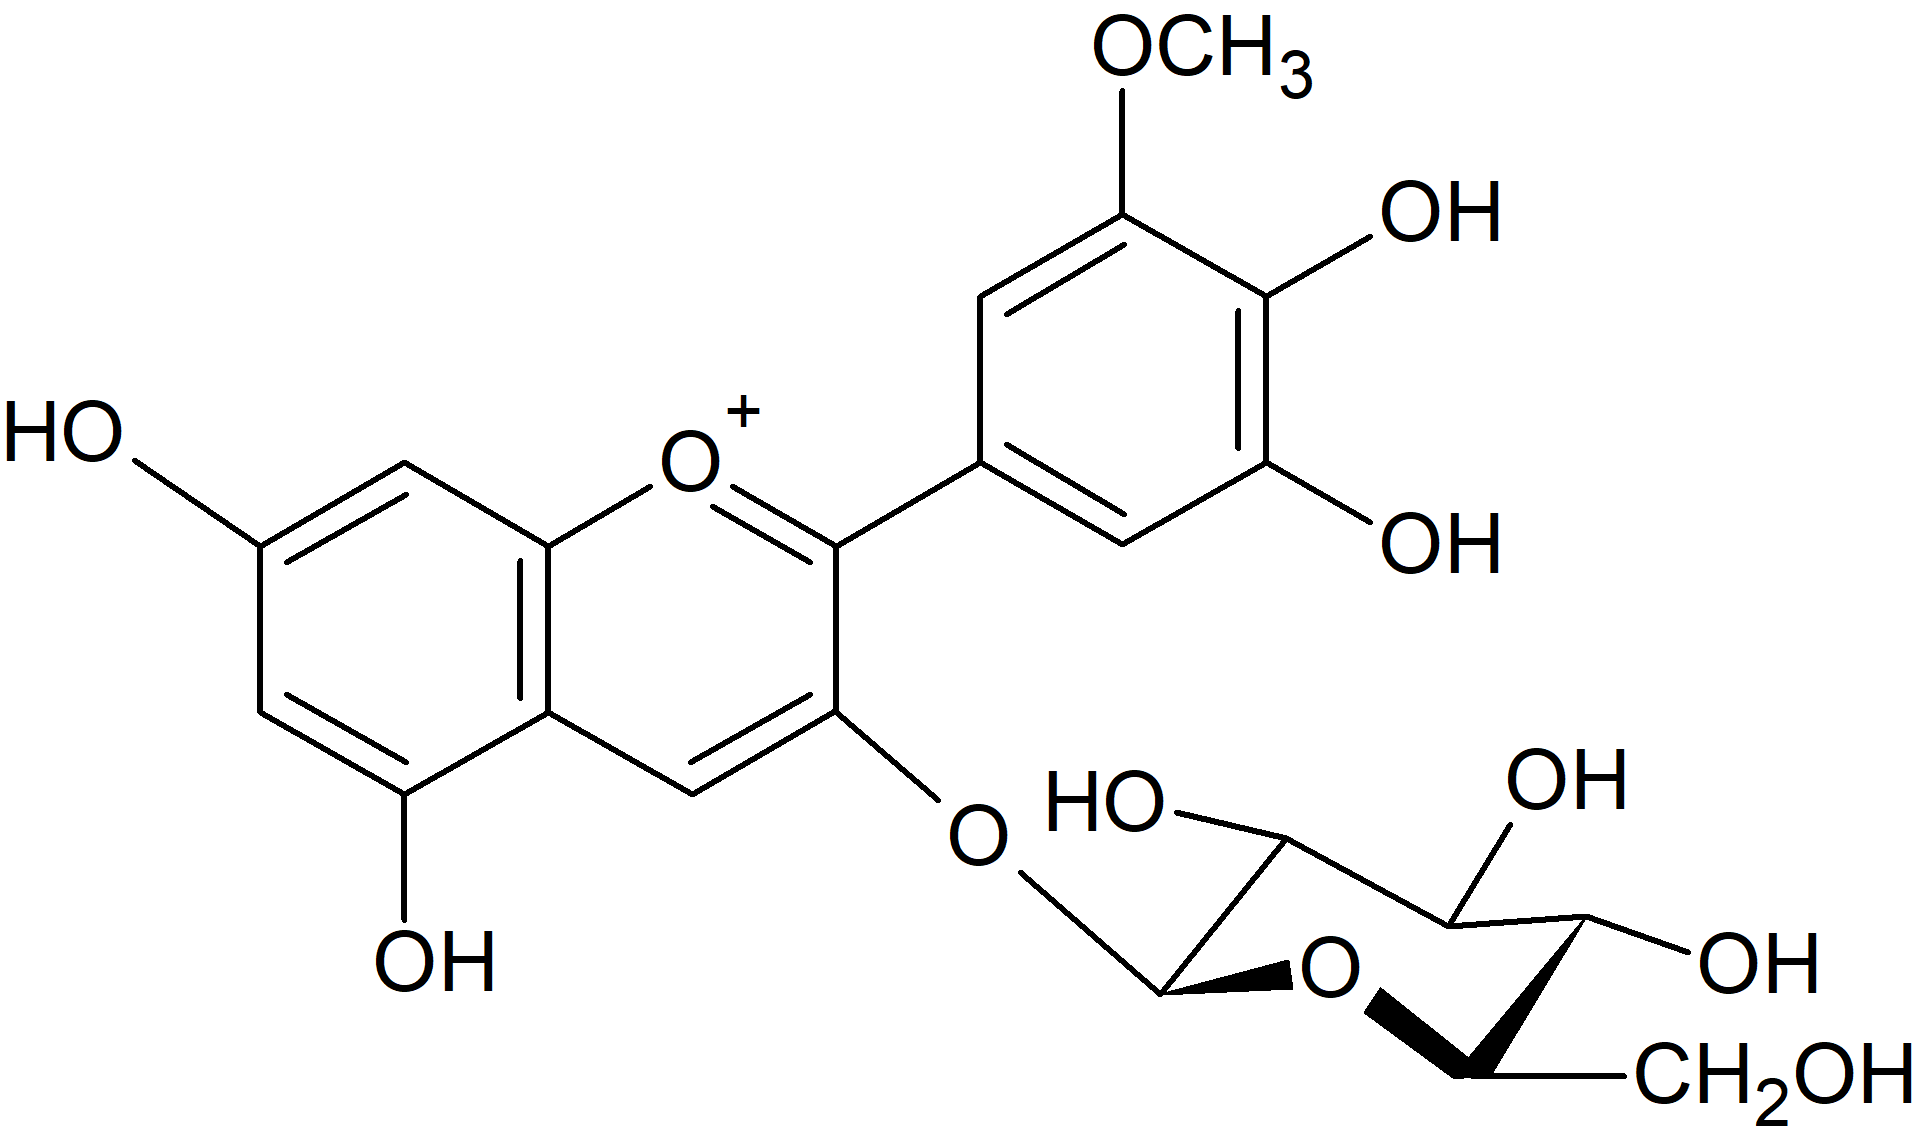 Petunidin 3-O-glucoside